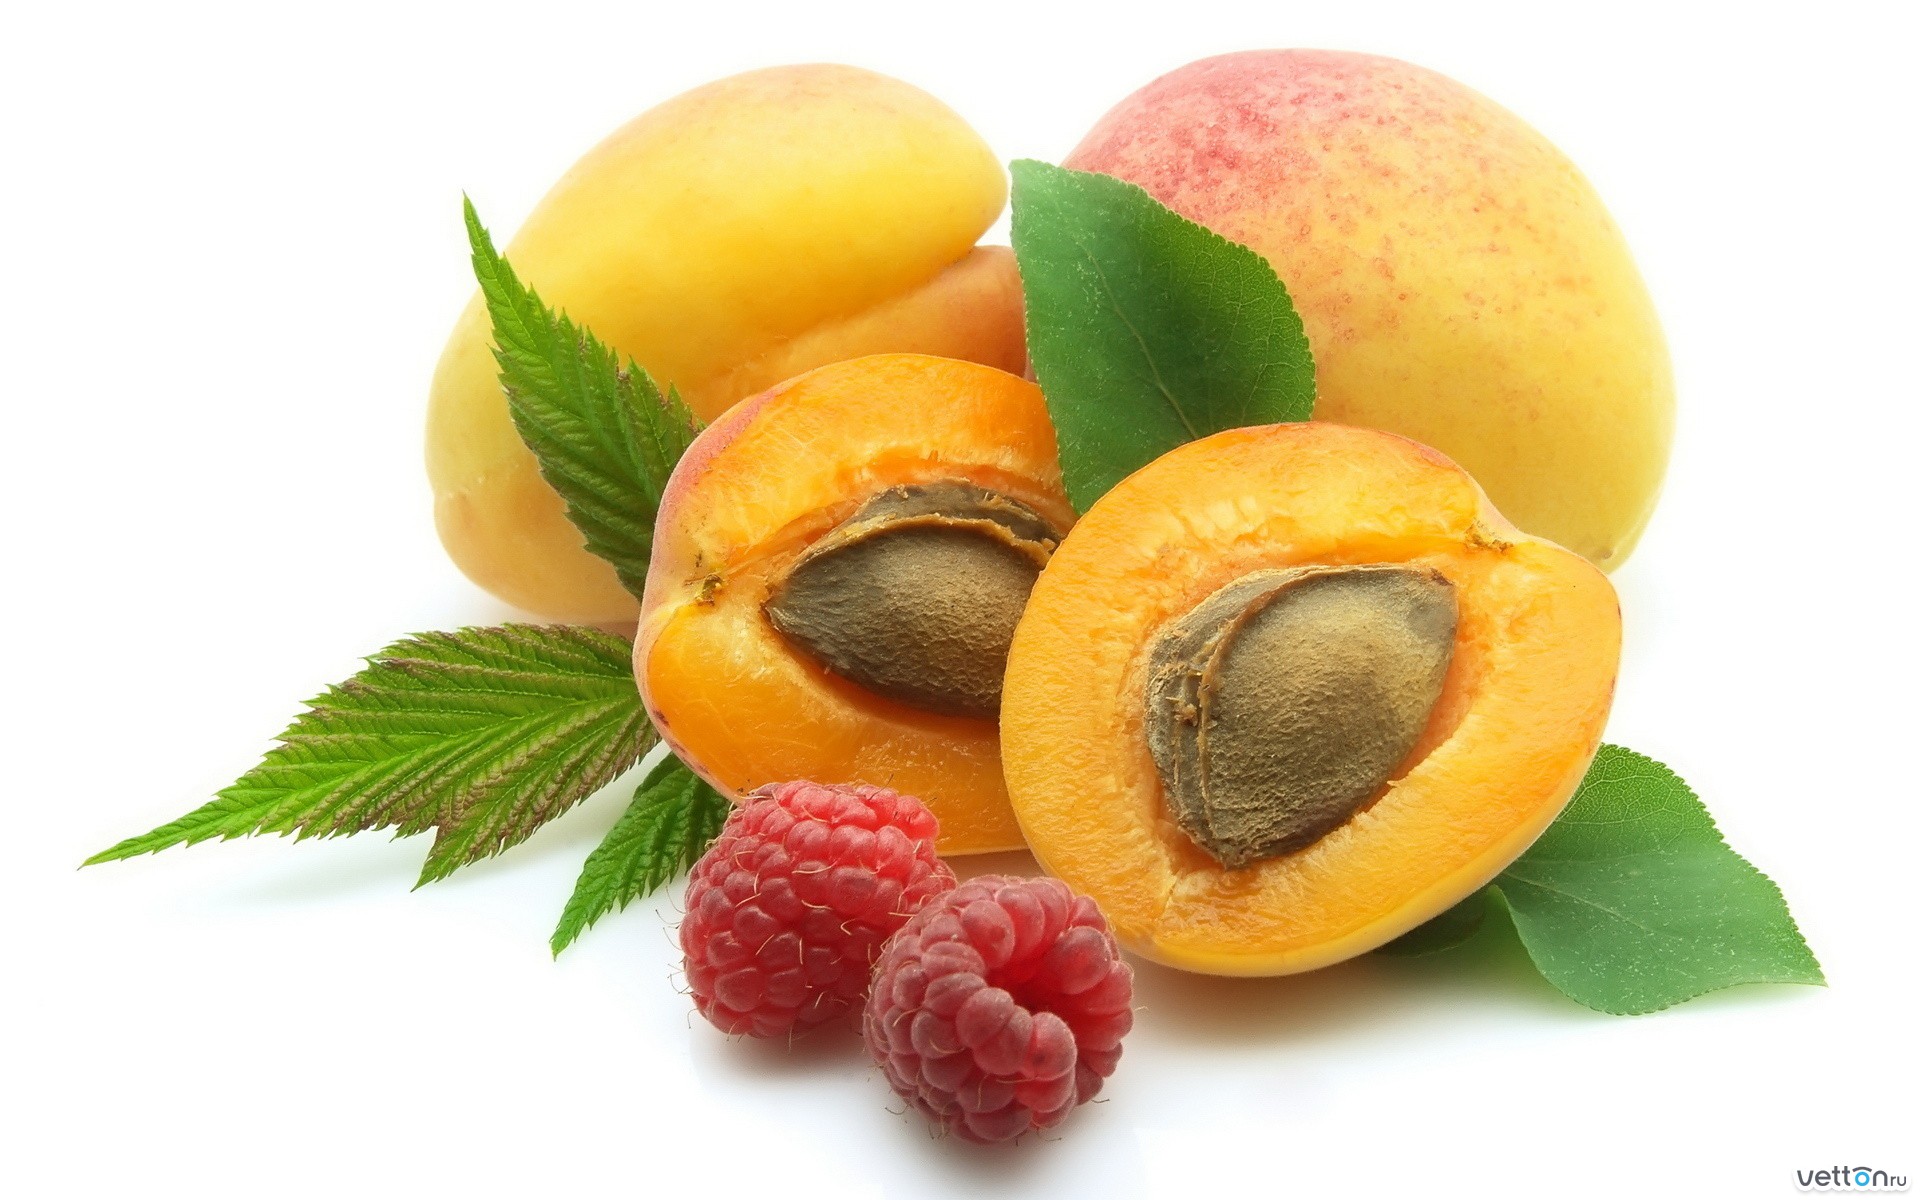 Healing properties of apricots